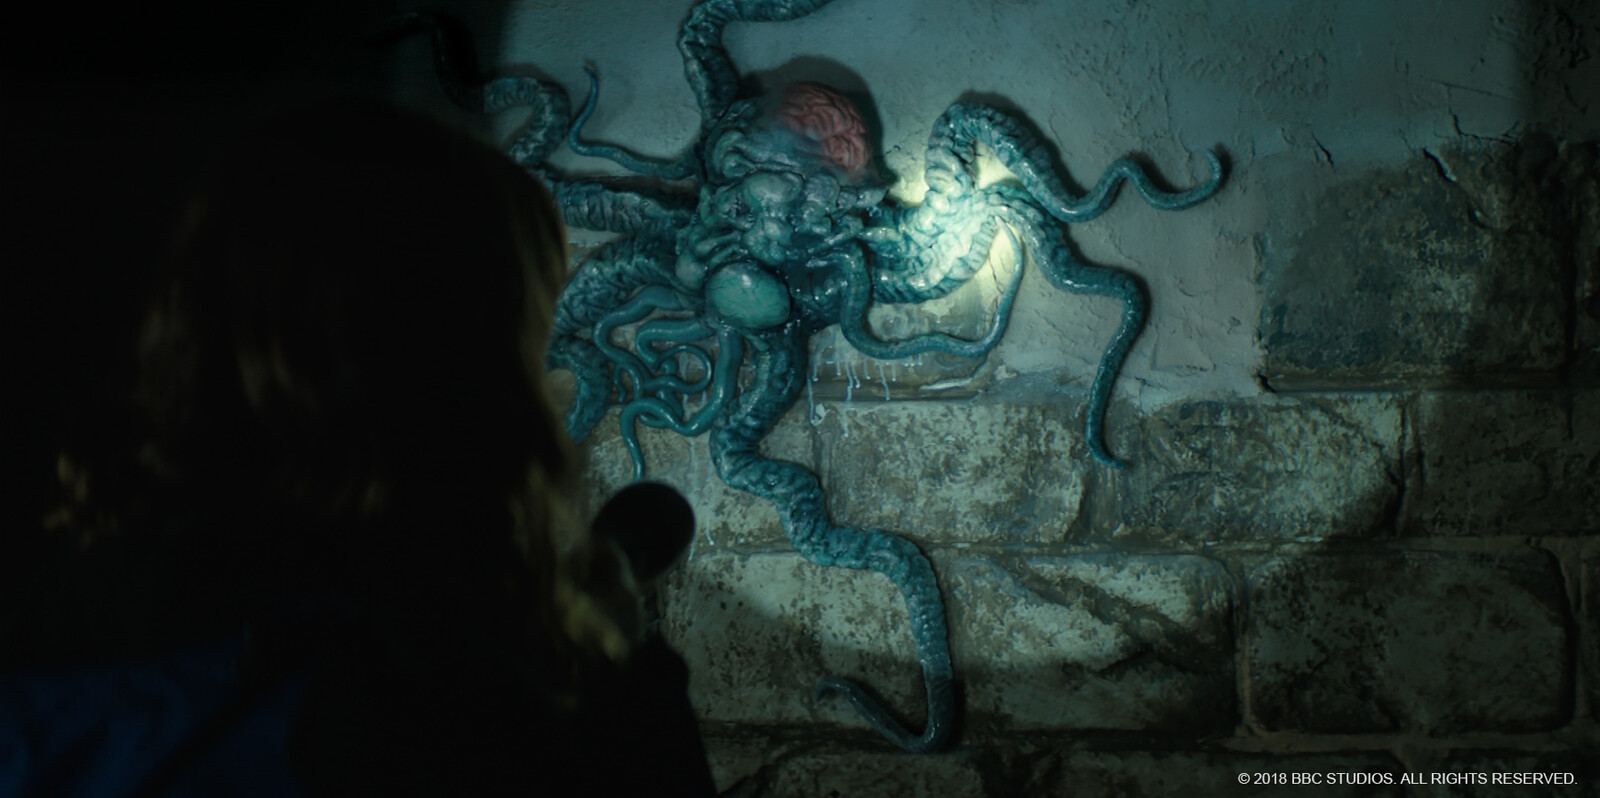 Dalek 'squid' - shot lighting